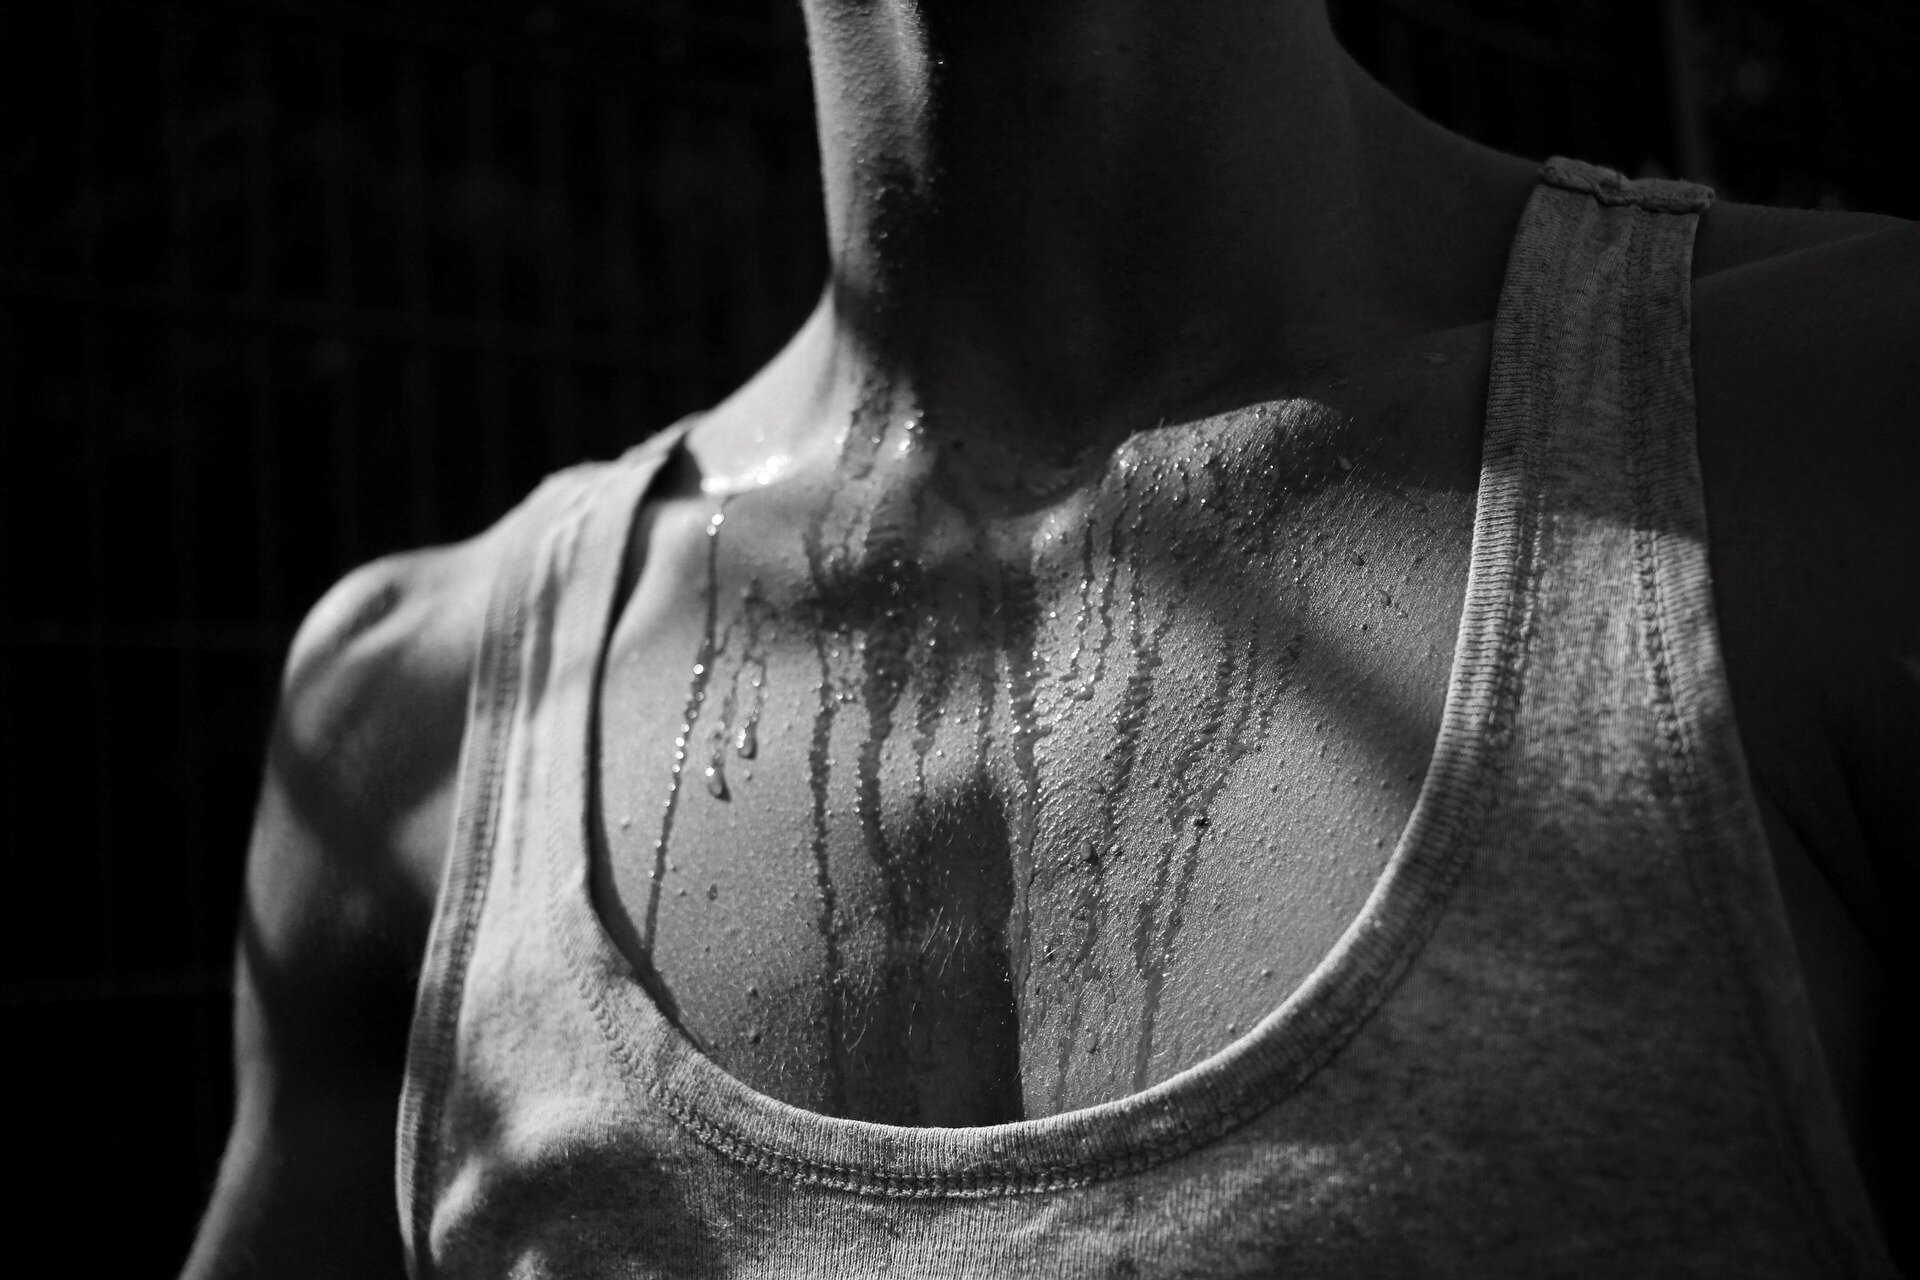 ‘Smart necklace’ biosensor may track health status through sweat